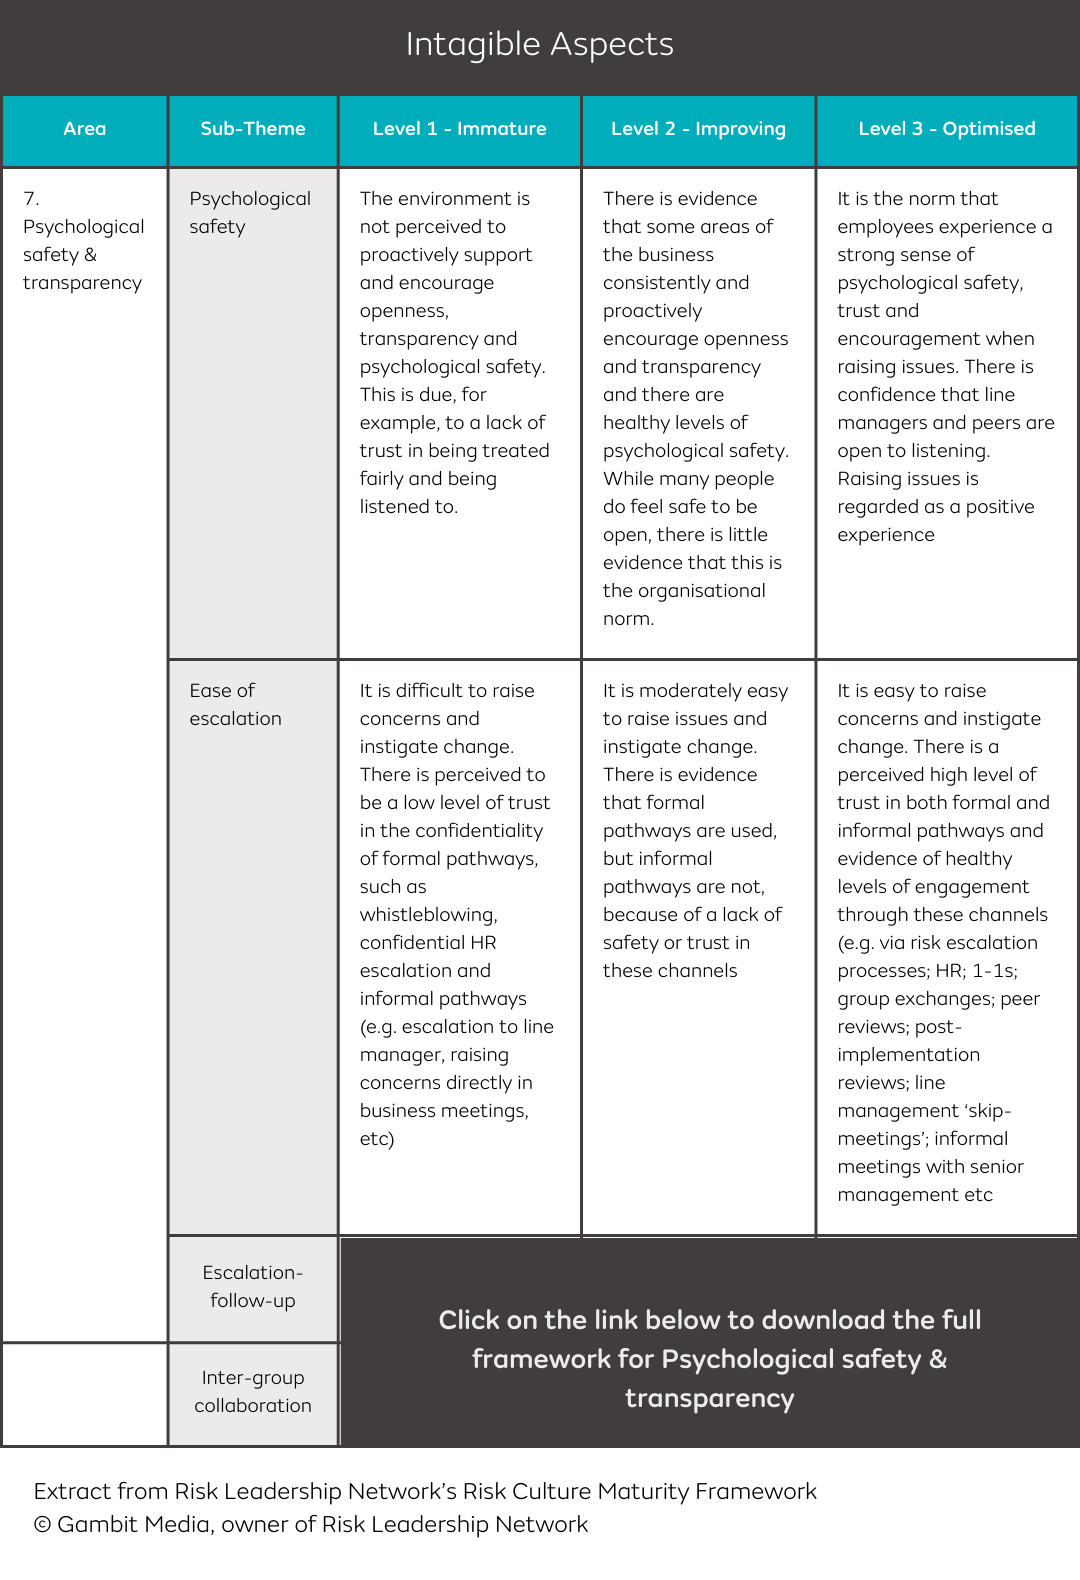 Risk Culture Maturity Framework Psychological safety & transparency